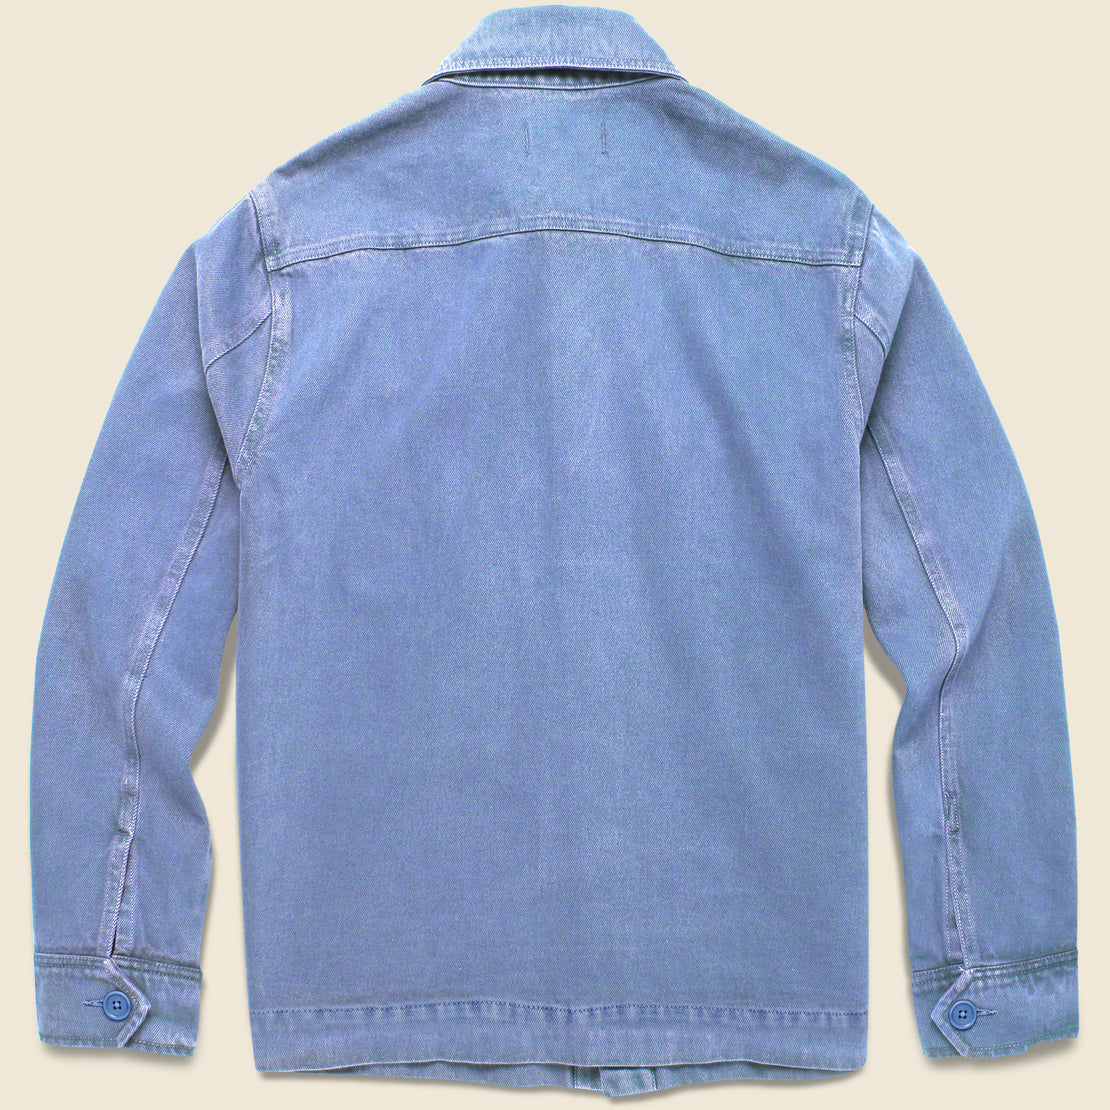 Recyled Denim Work Jacket - Coastal - Alex Mill - STAG Provisions - Outerwear - Coat / Jacket